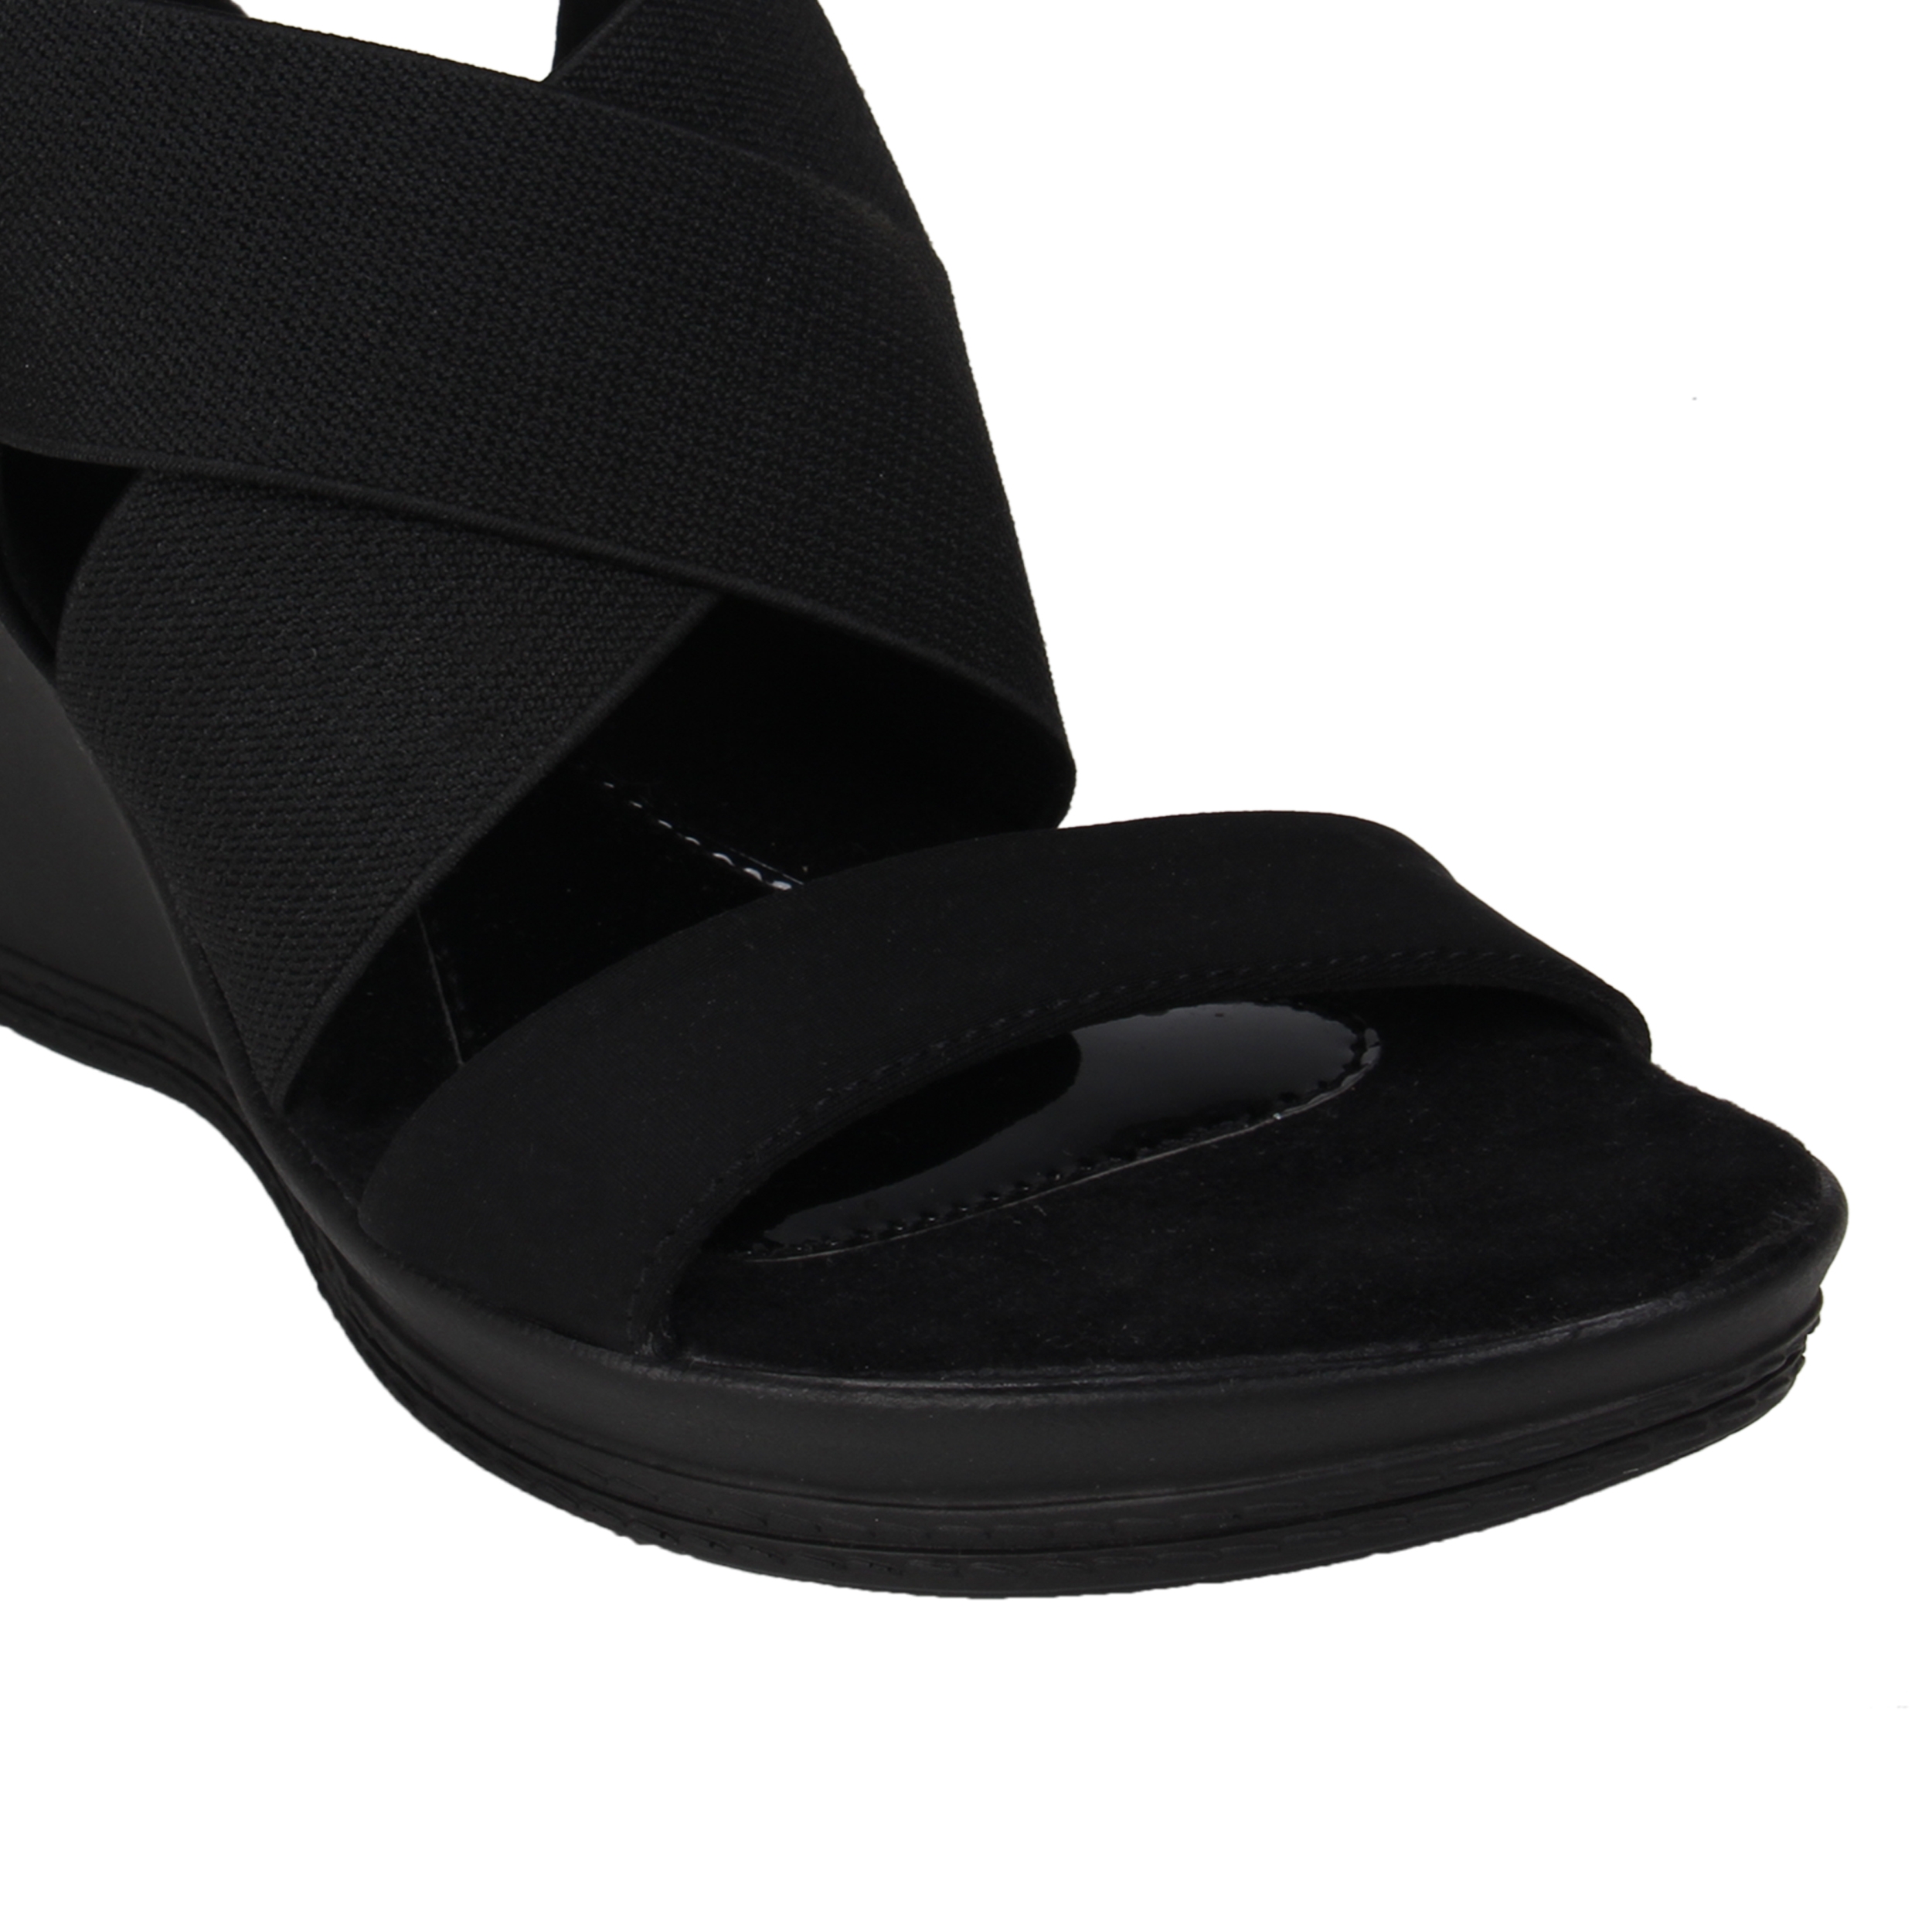 CATWALK | Dual-toned Textured Sandals